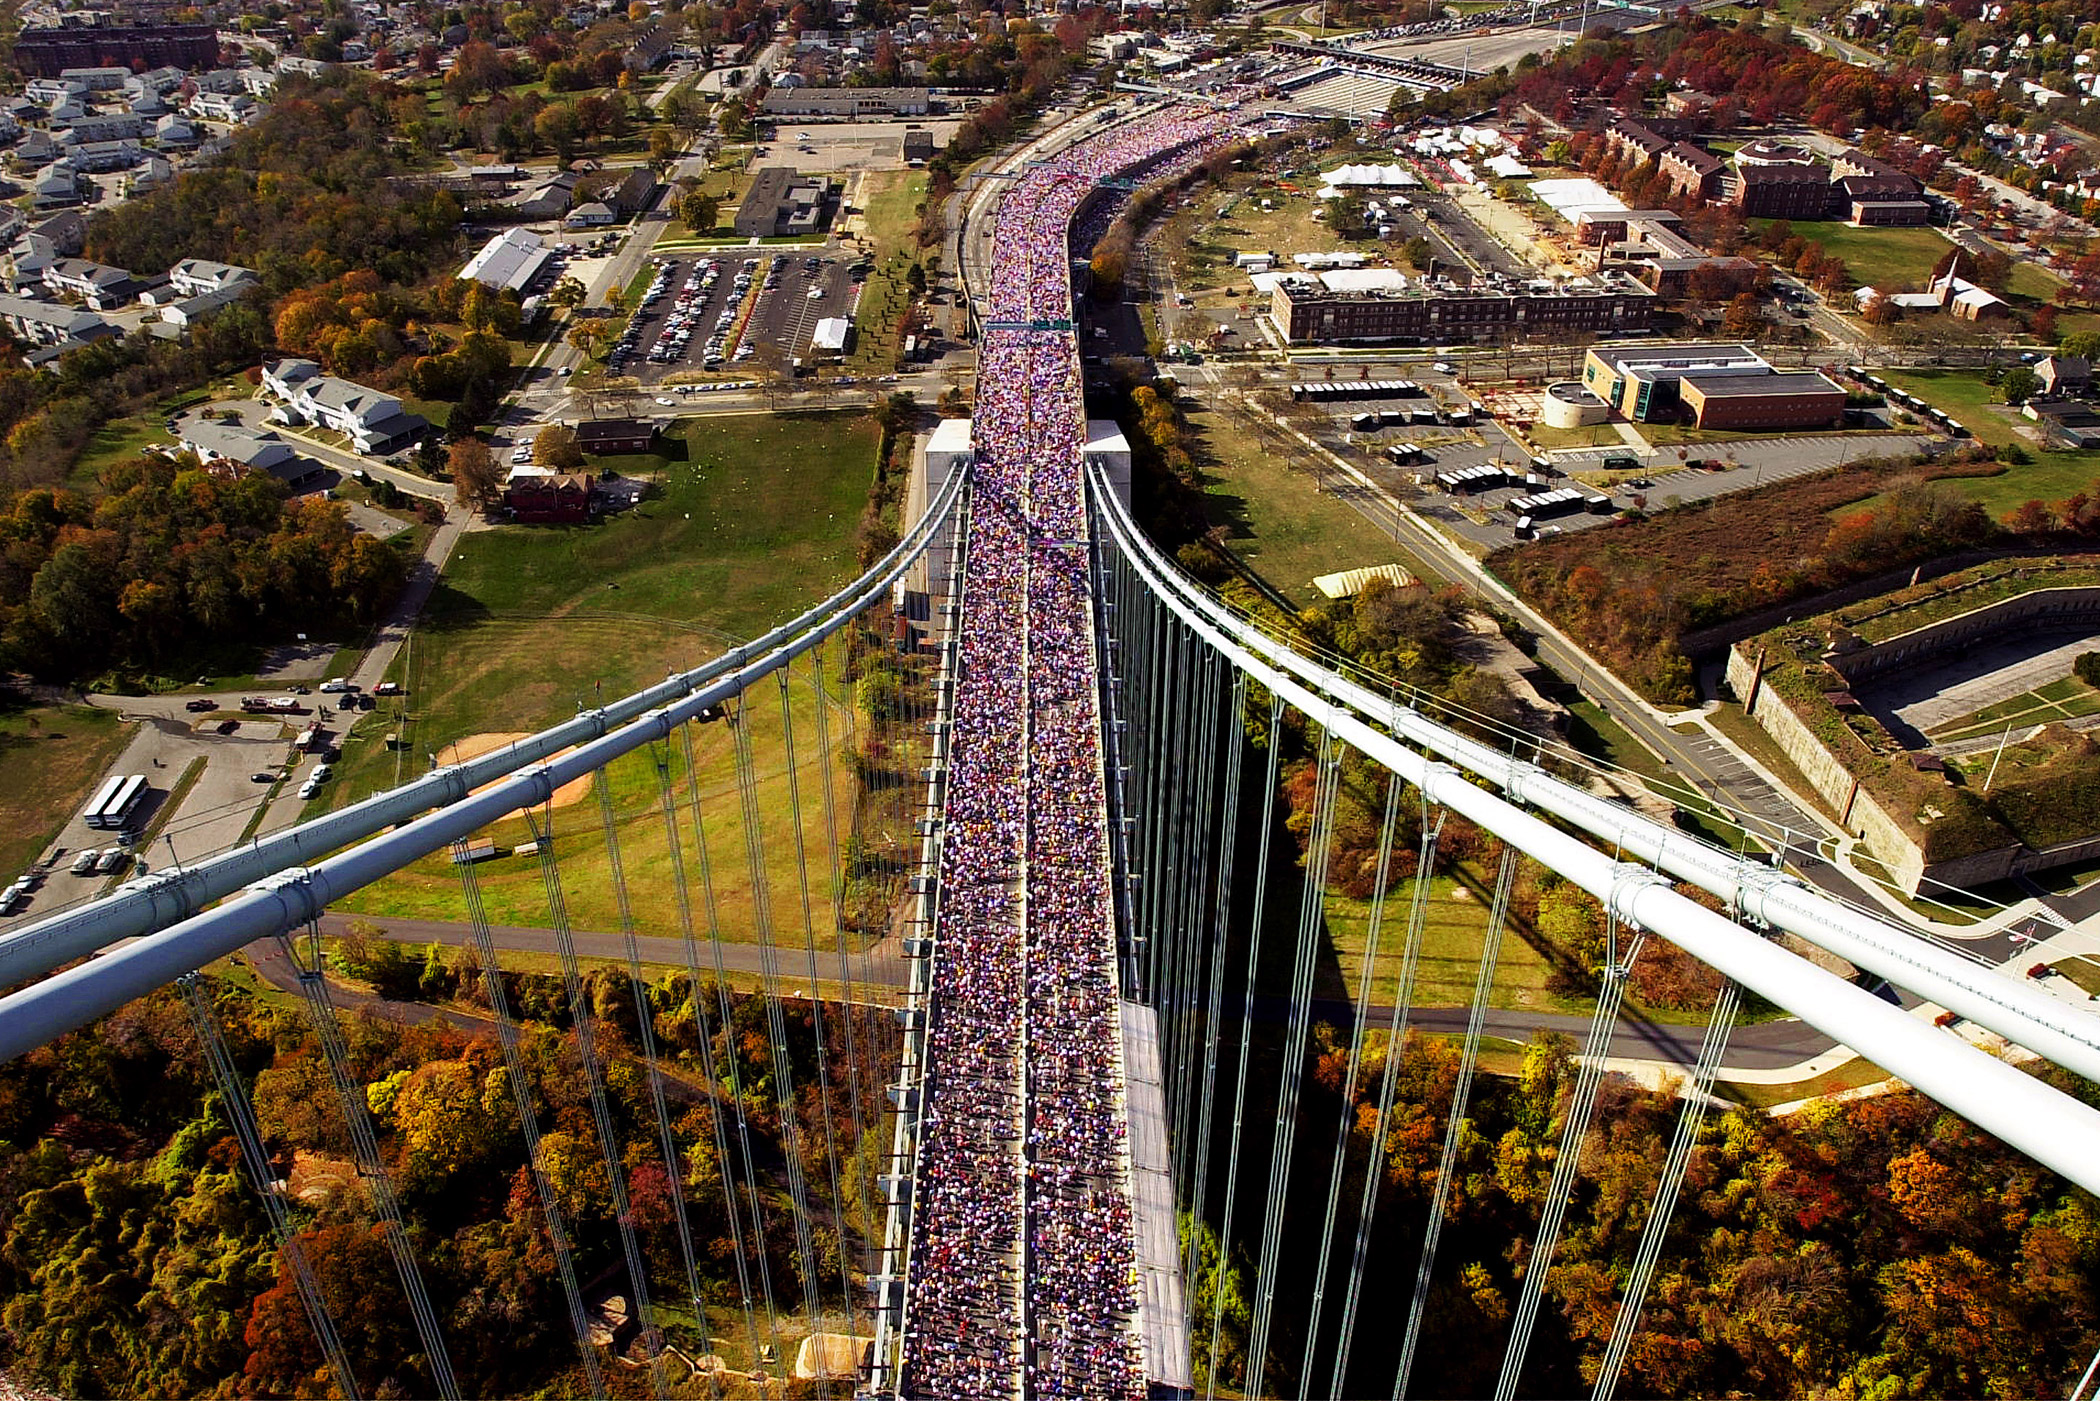 Runners make their way across the Verrazano Narrows Bridge in New York at the start of the New York City Marathon on Nov. 5, 2000.